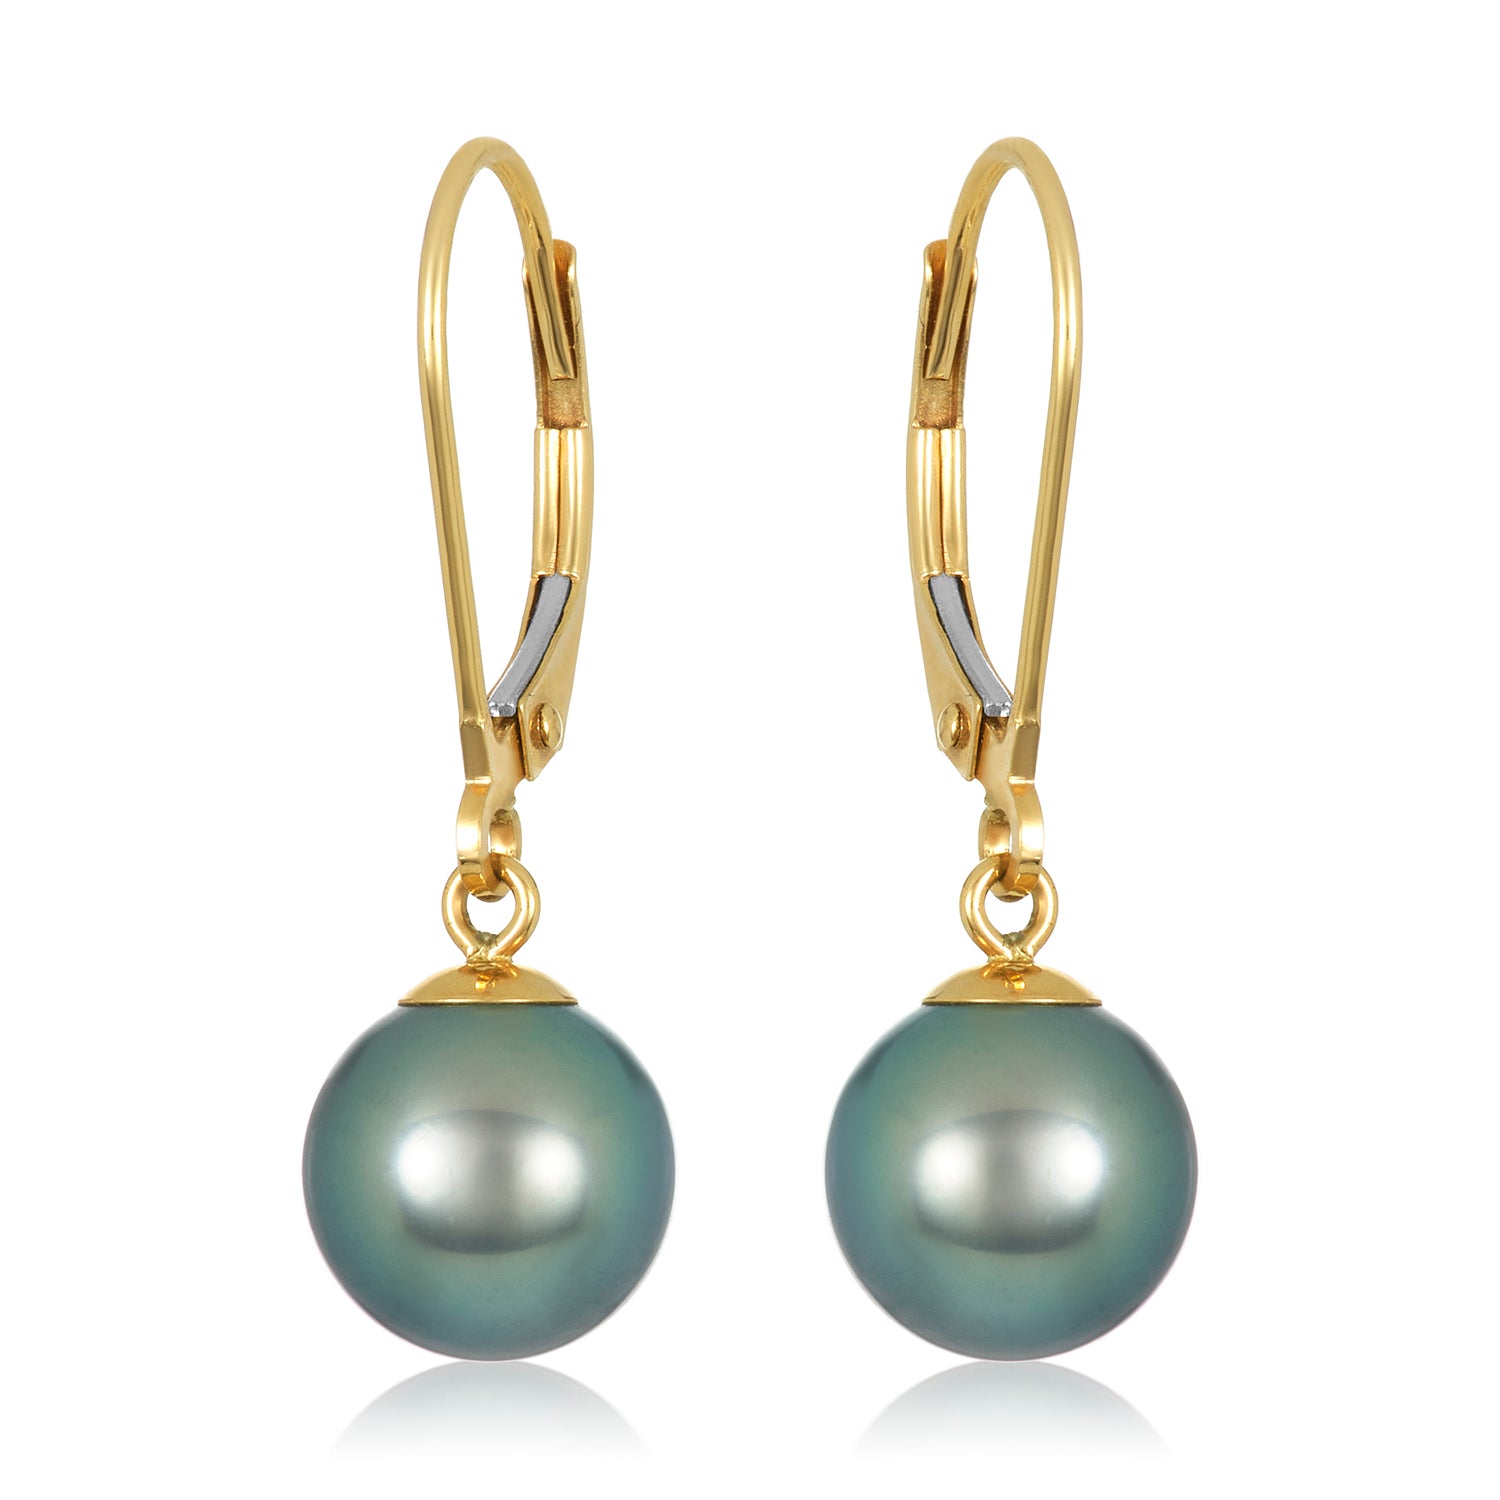 Perfect Grey Pearl earrings